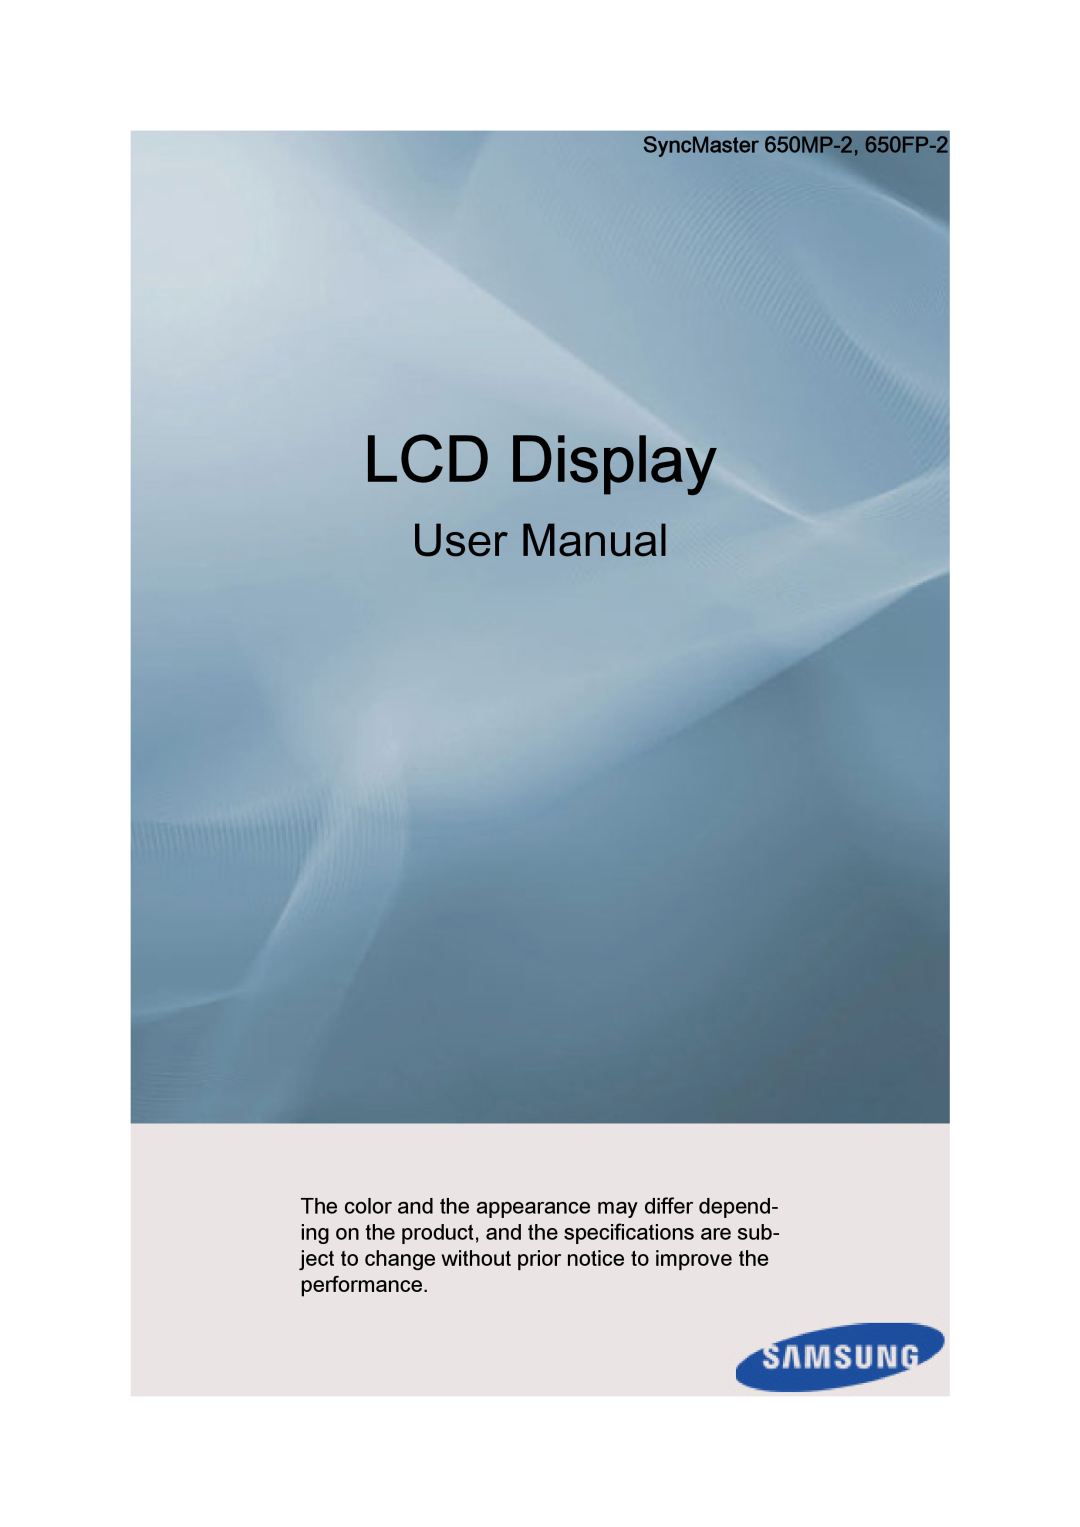 Samsung user manual SyncMaster 650MP-2, 650FP-2, LCD Display, User Manual 